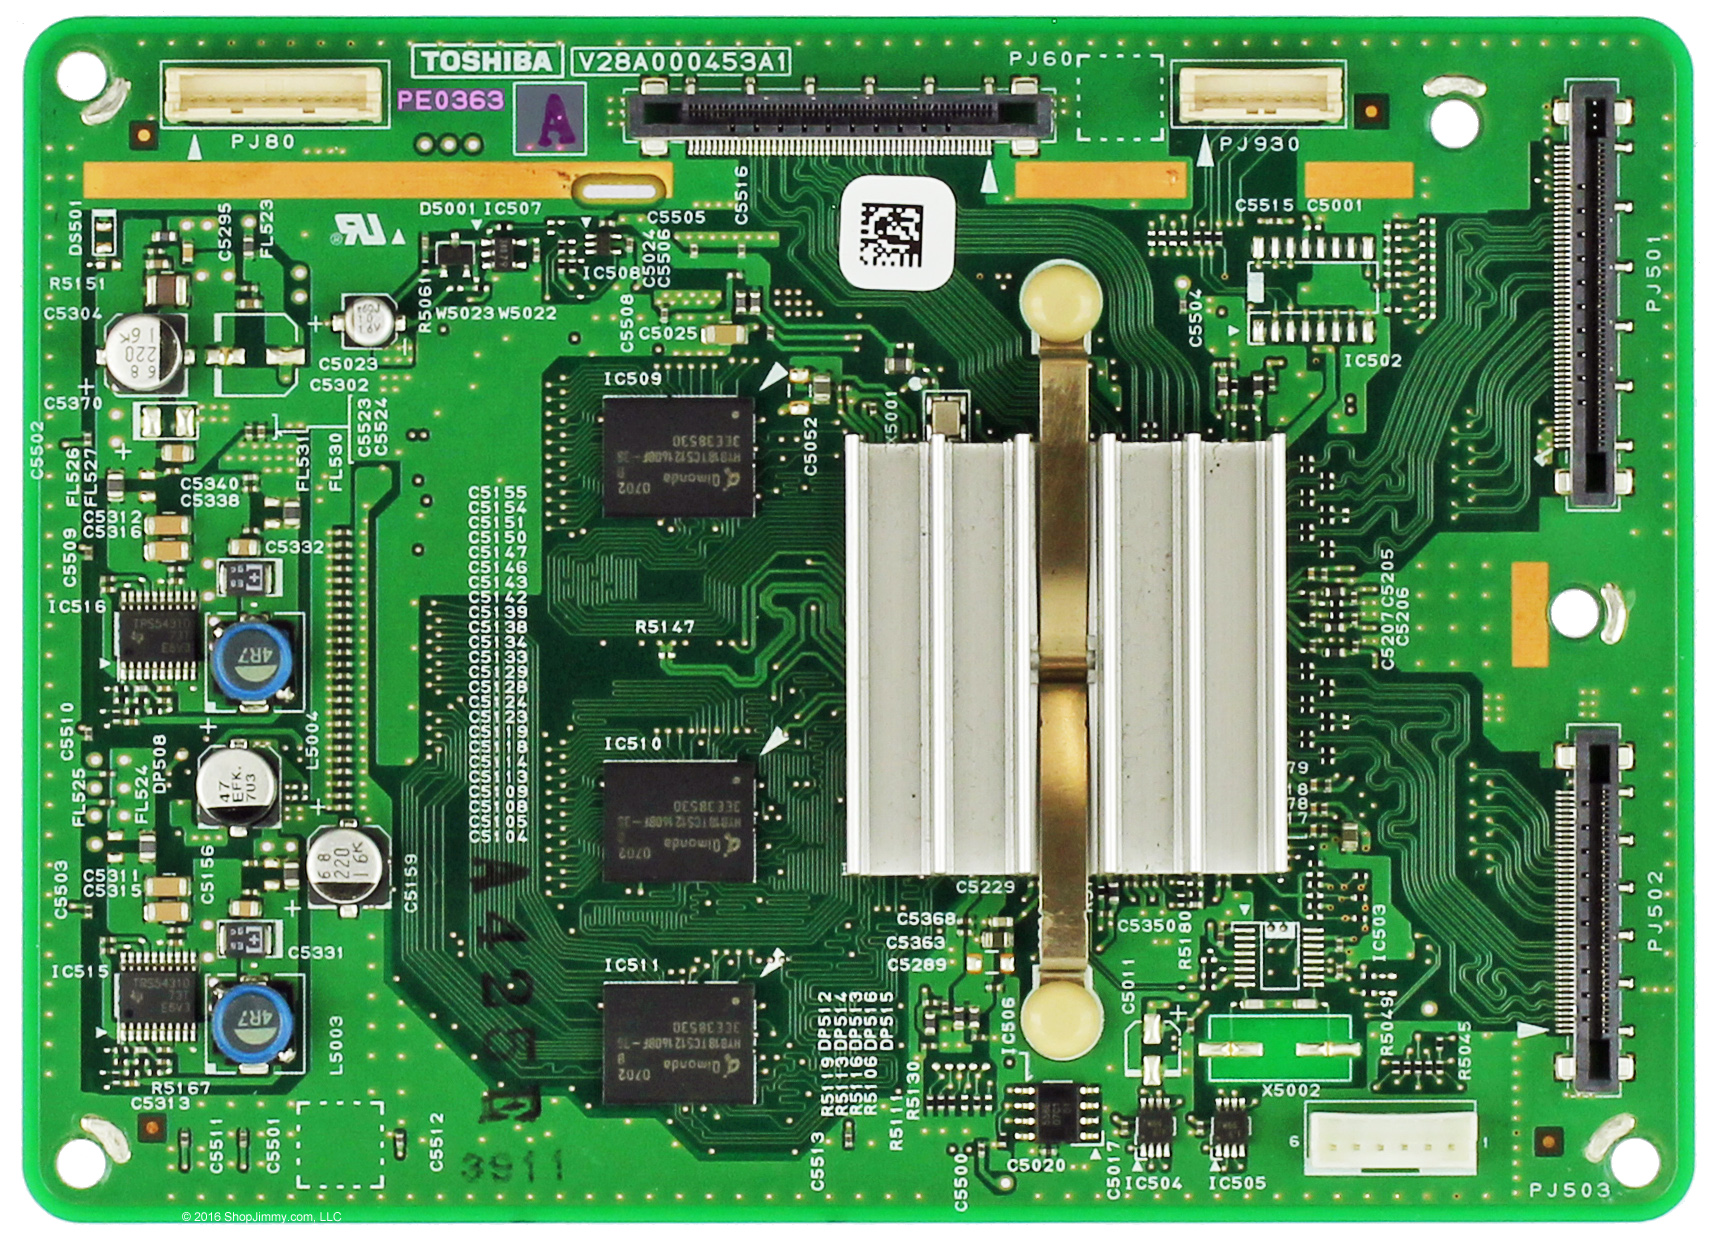 Toshiba 75008025 (PE0363A, V28A000453A1) PC Board | eBay